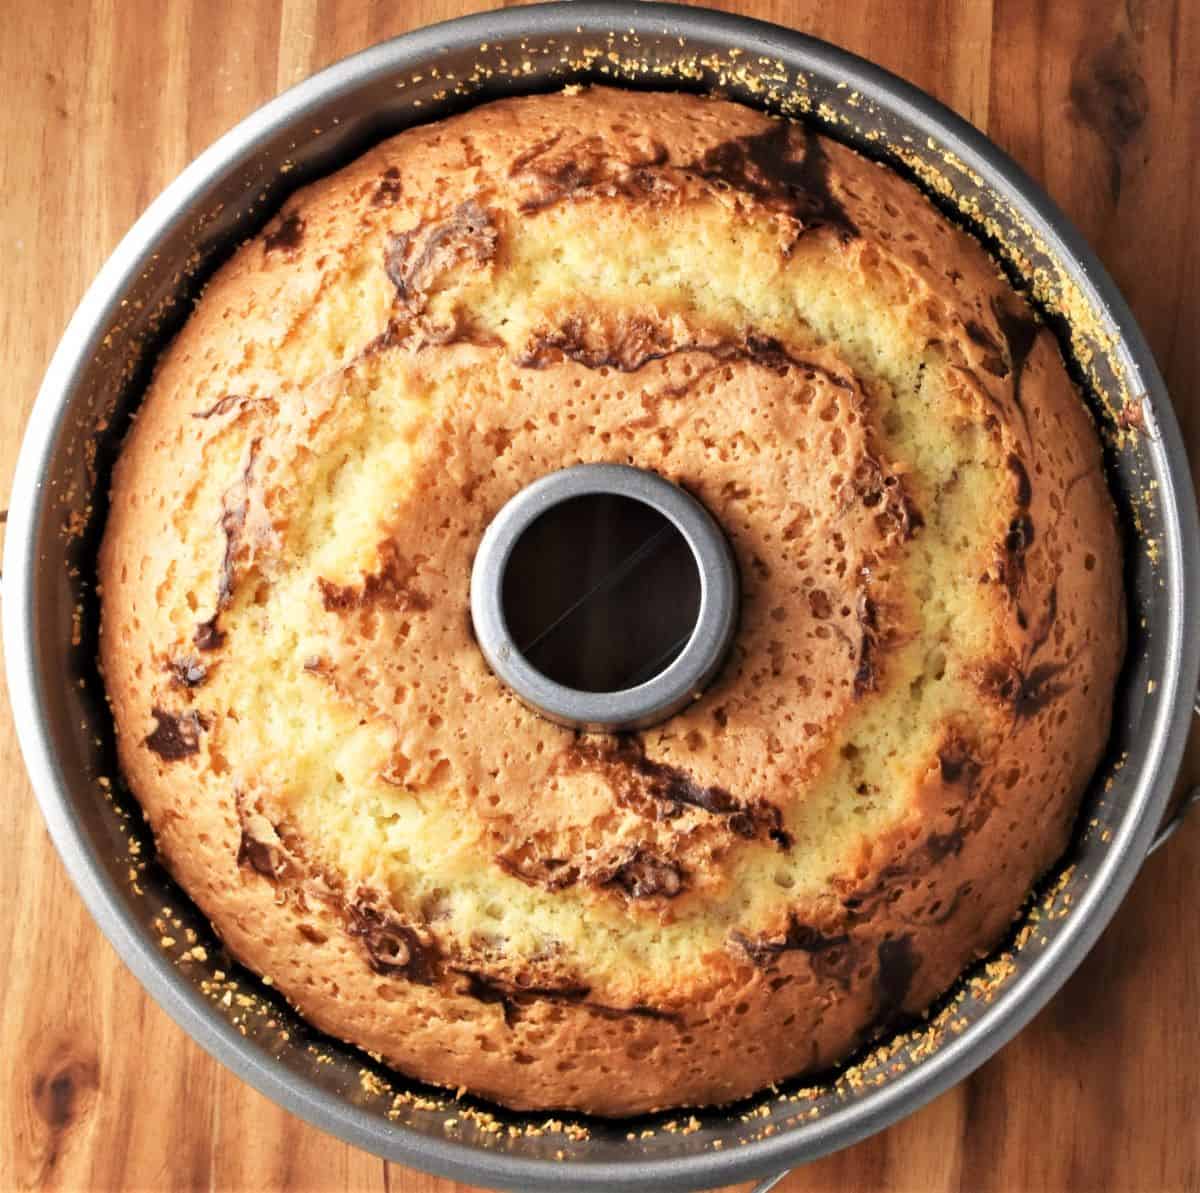 Top down view of baked babka in large ring pan.